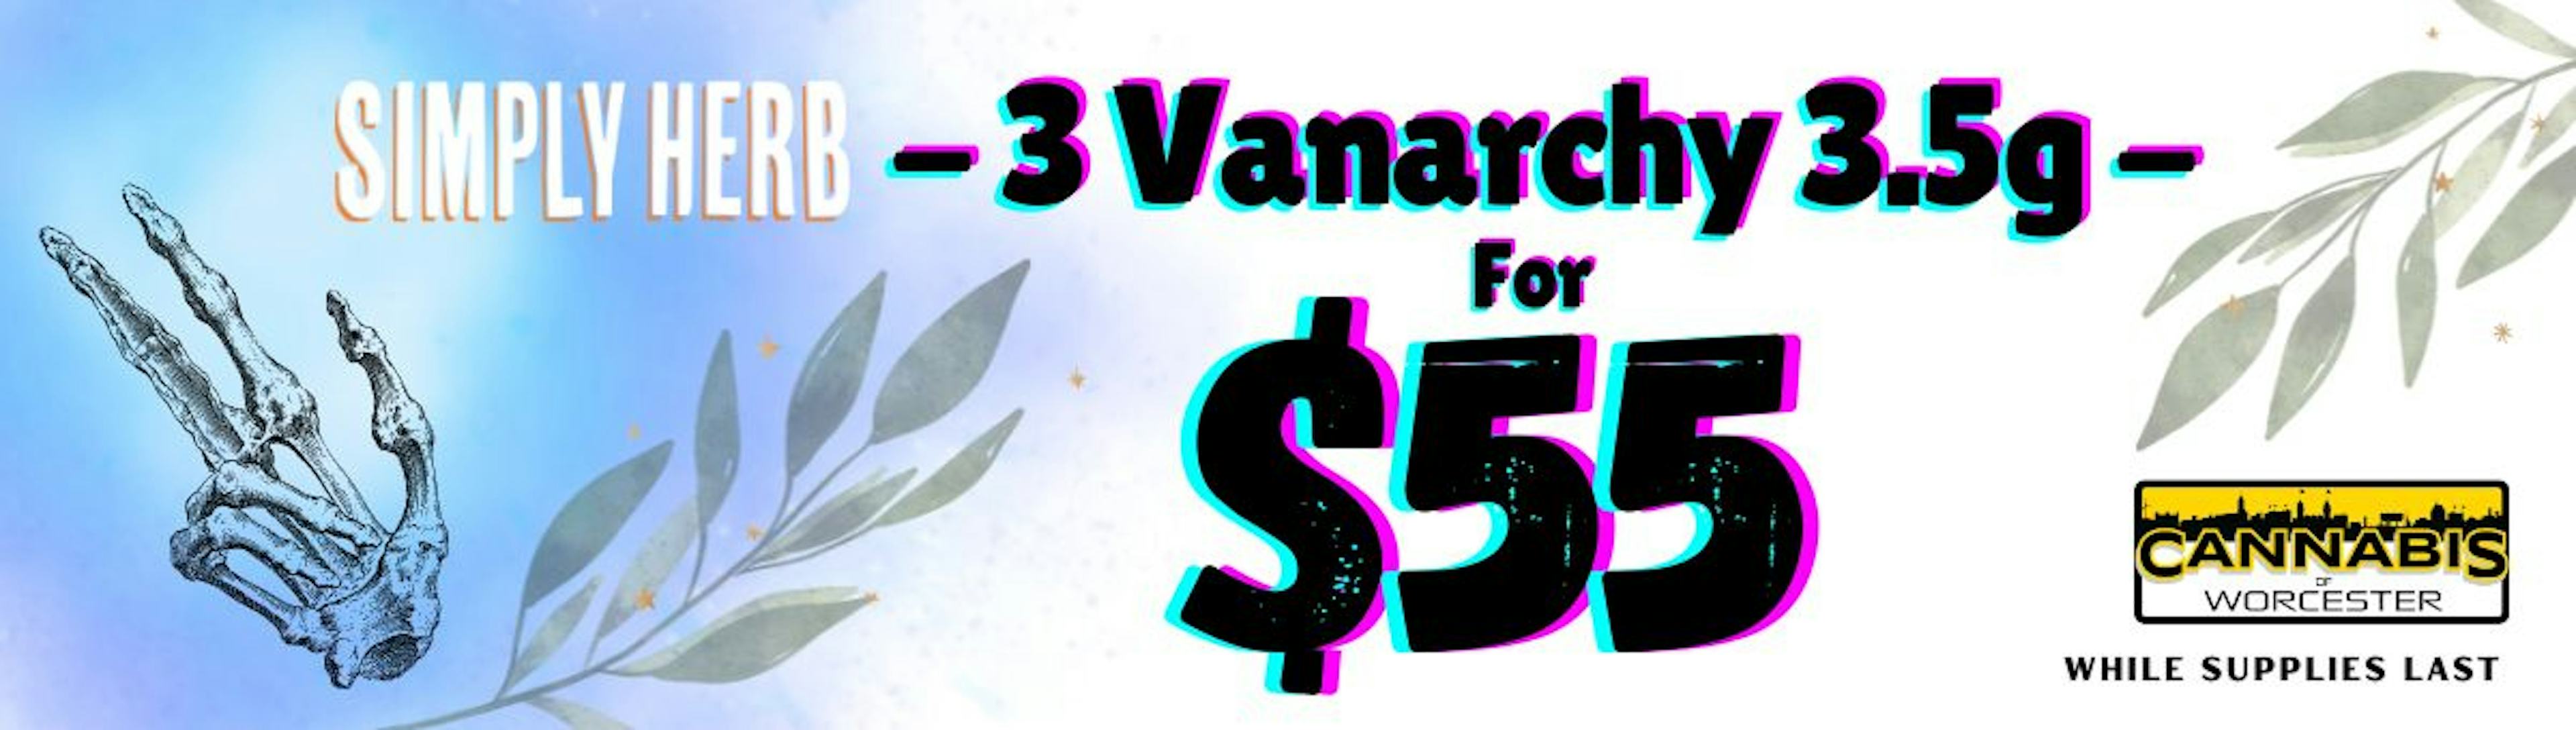 Simply Herb Vanarchy Deal $55